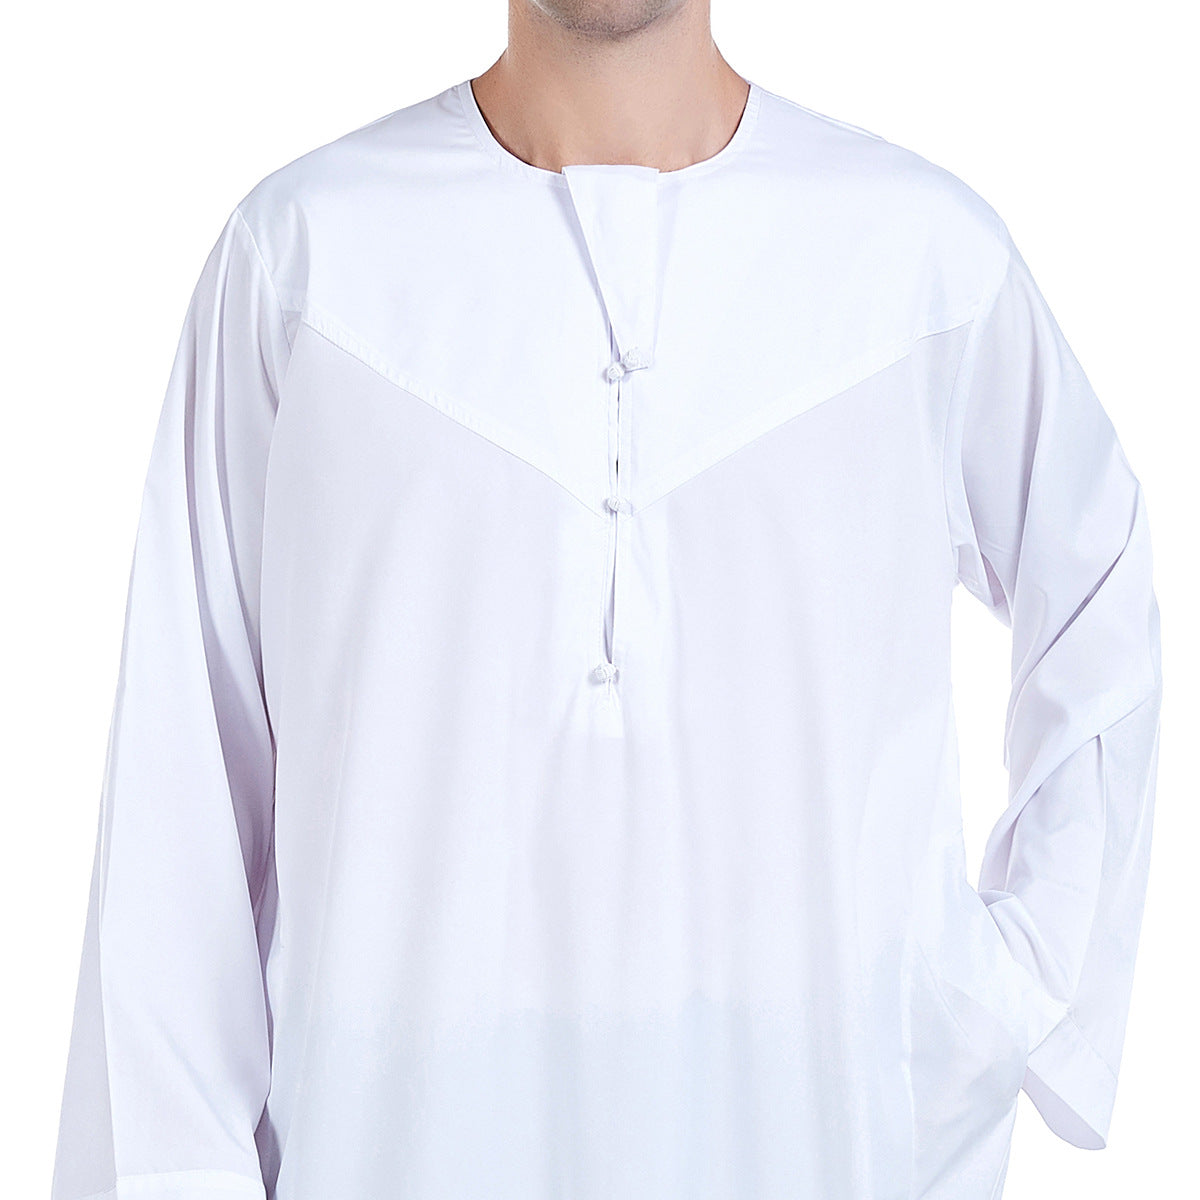 Arab Middle Eastern Men's Robe.